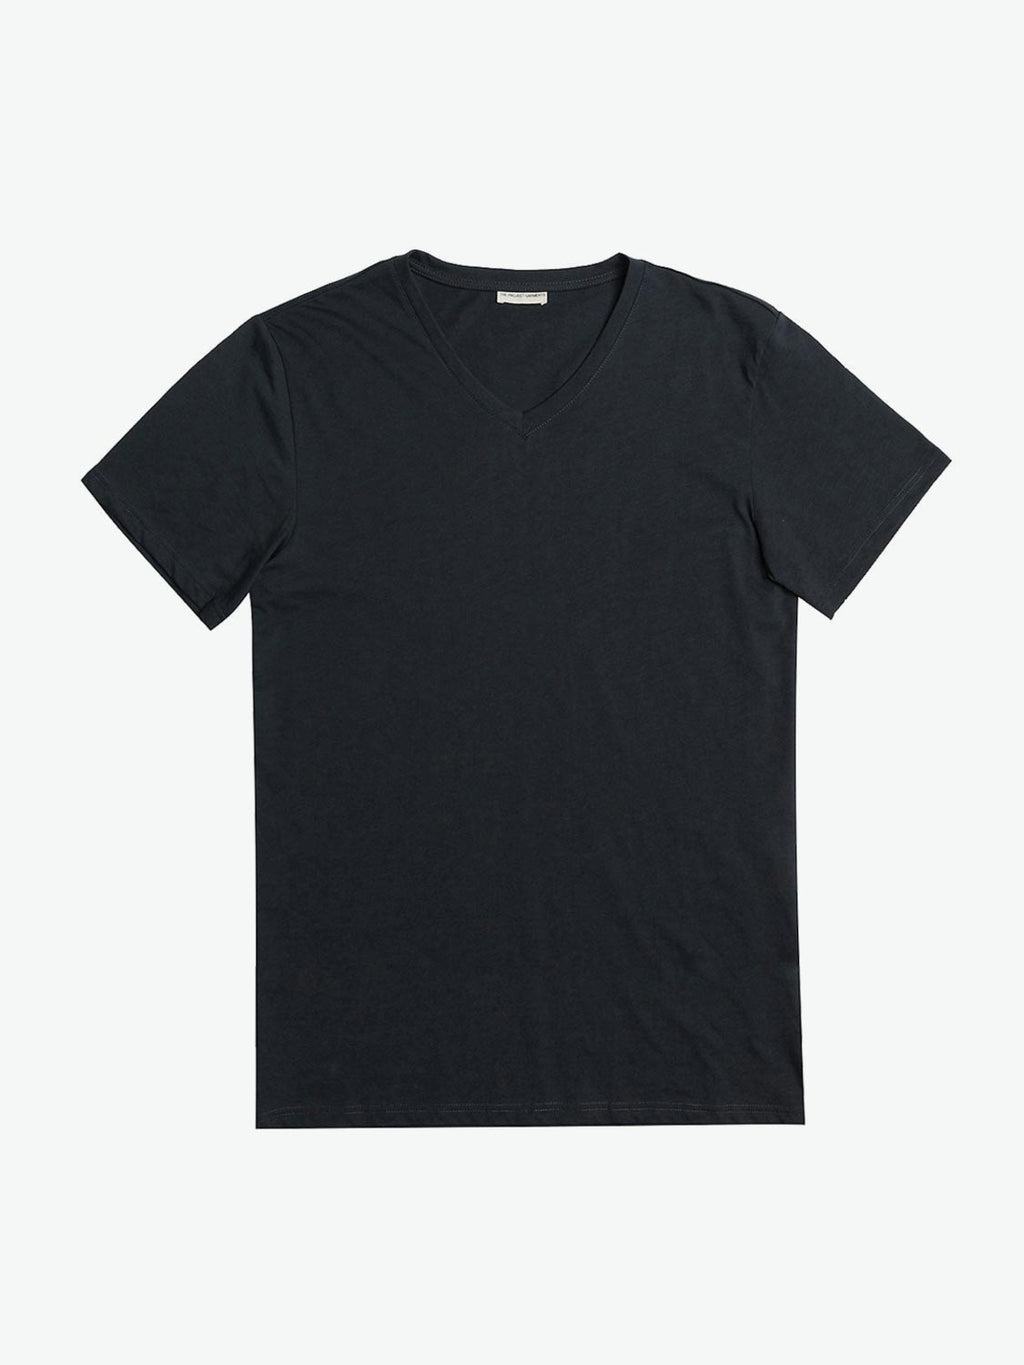 The Project Garments Organic Cotton V-neck T-shirt Charcoal Grey